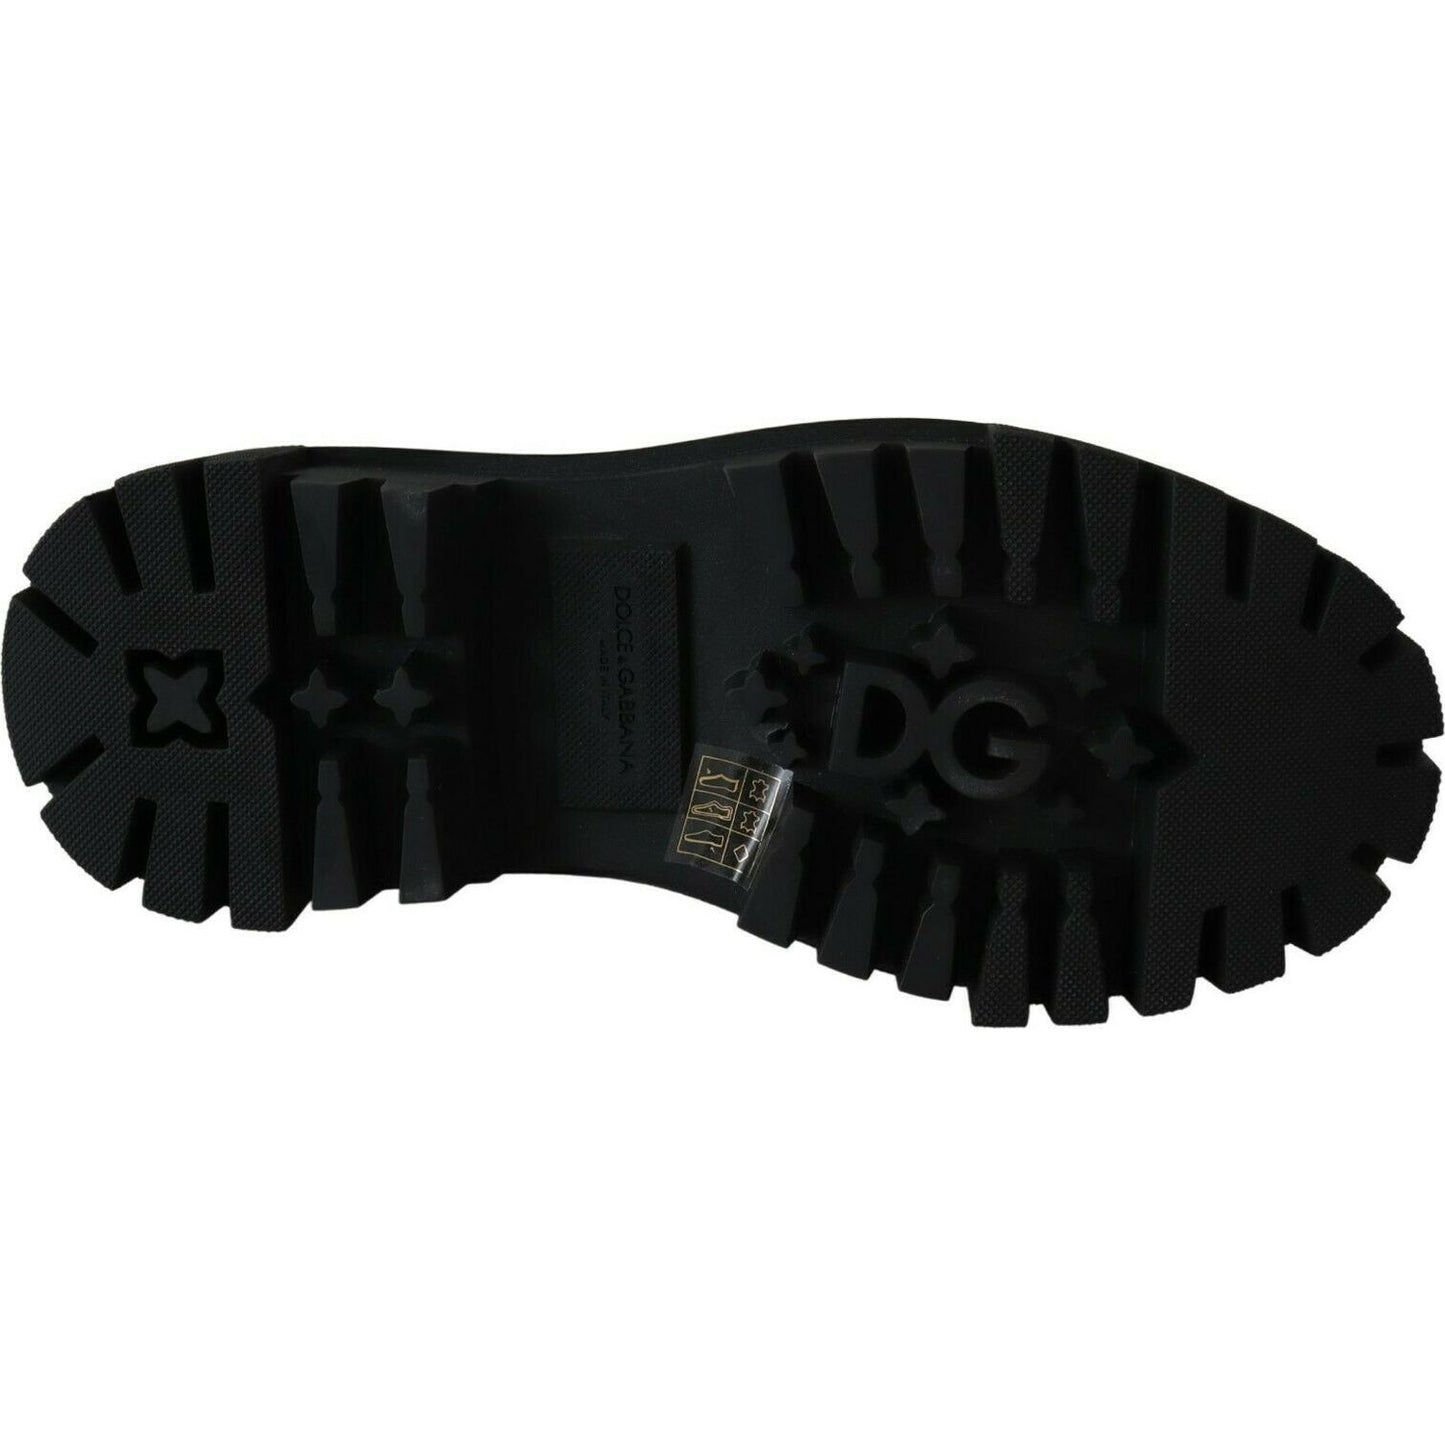 Dolce & Gabbana Elegant Black Leather Combat Boots with Crystal Detail black-leather-crystal-combat-boots